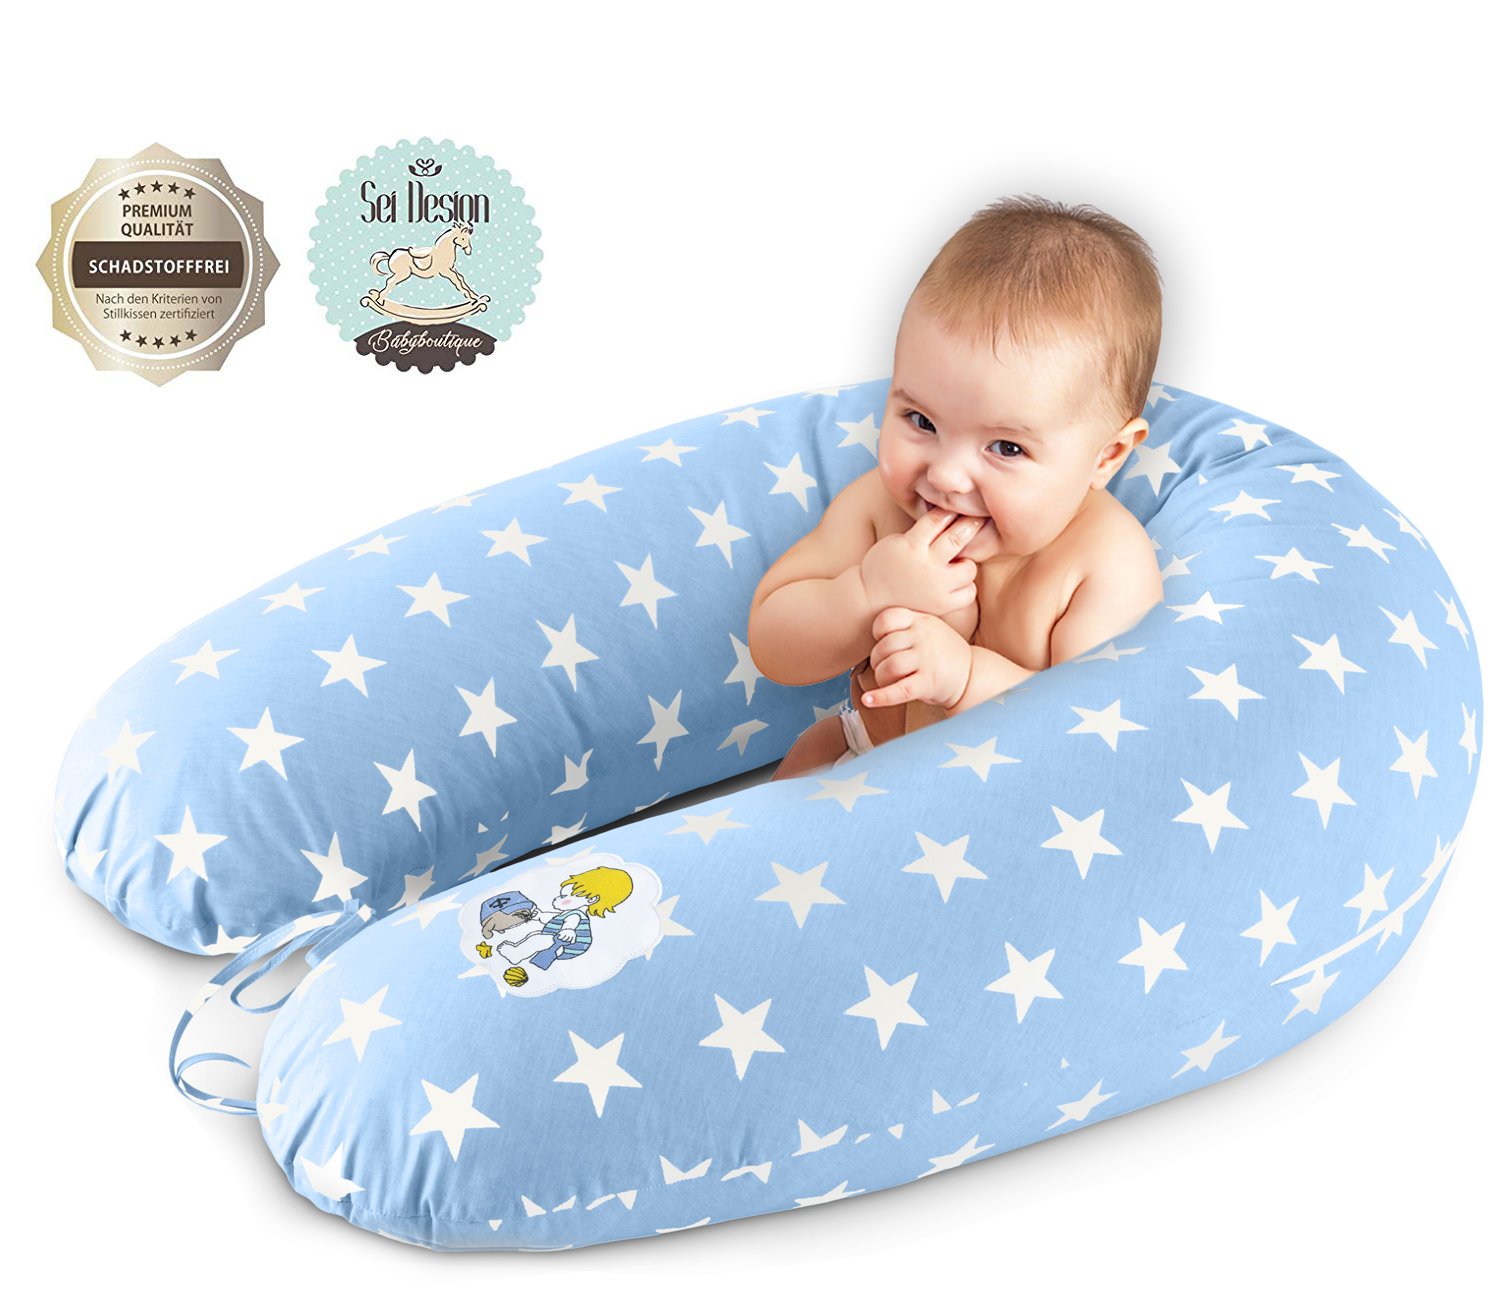 Sei Design Nursing Pillow Support Cushion Pregnancy Pillow Tested For Harmf